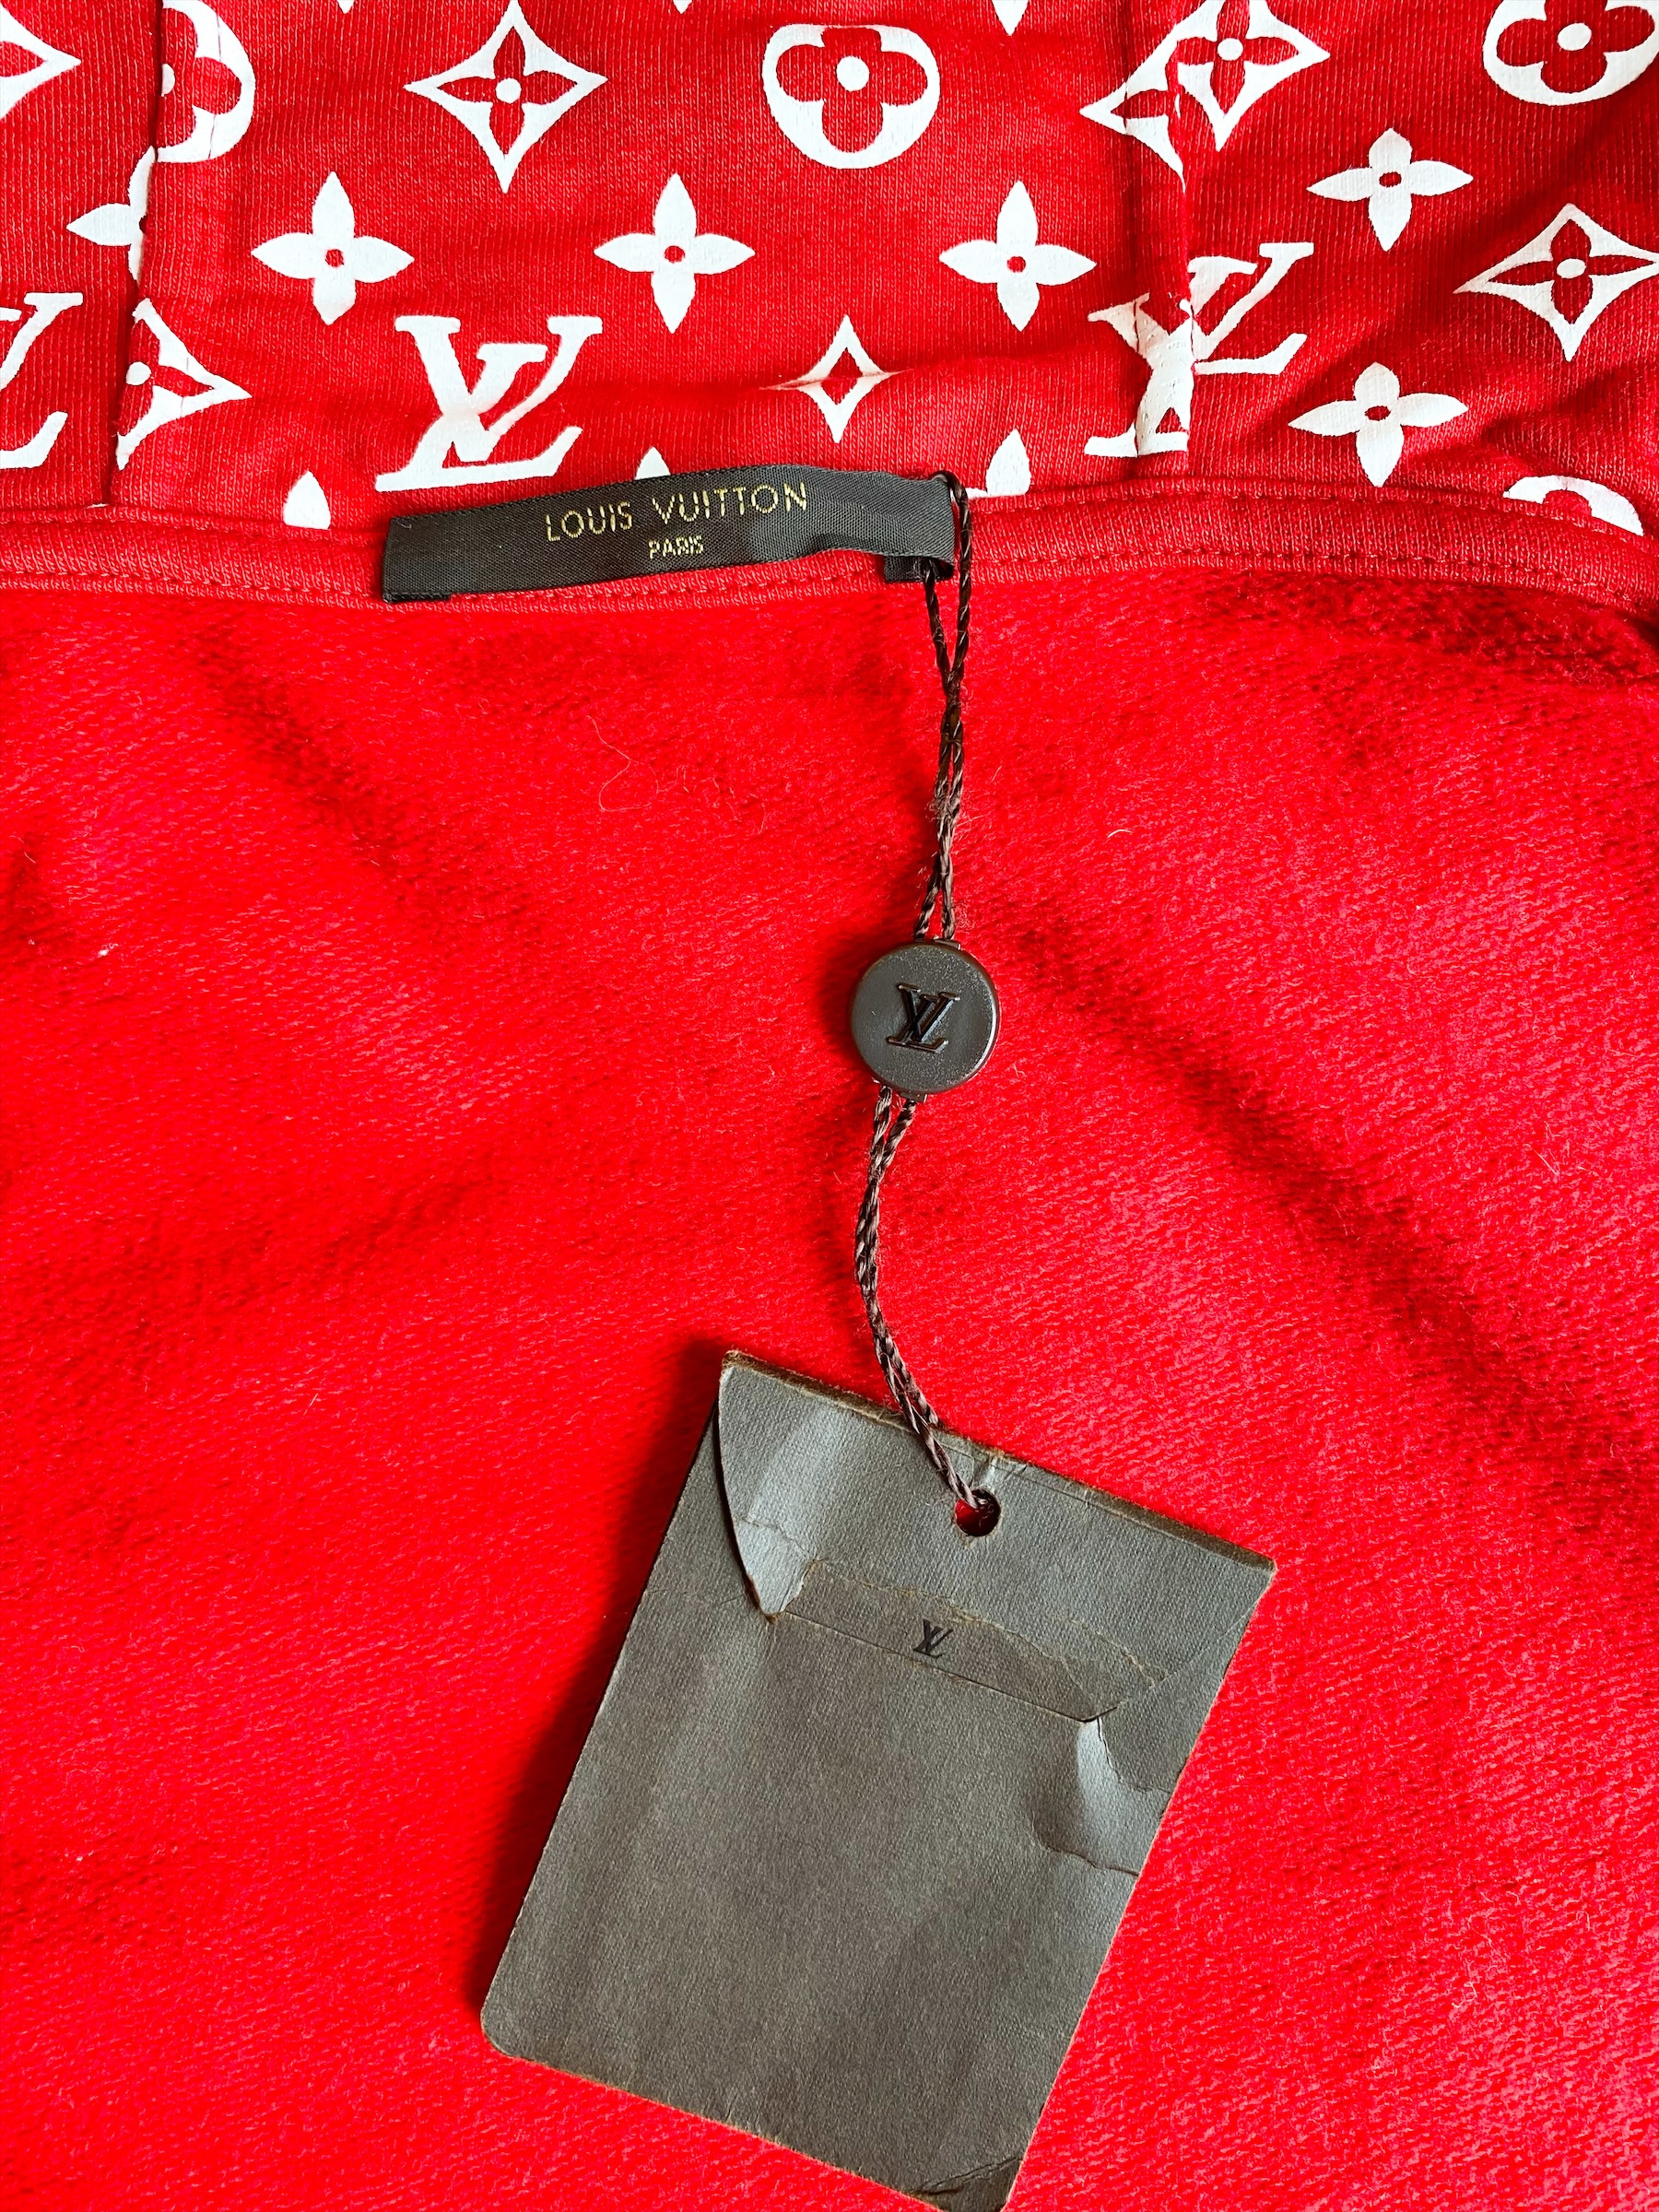 vuitton box logo hooded sweatshirt